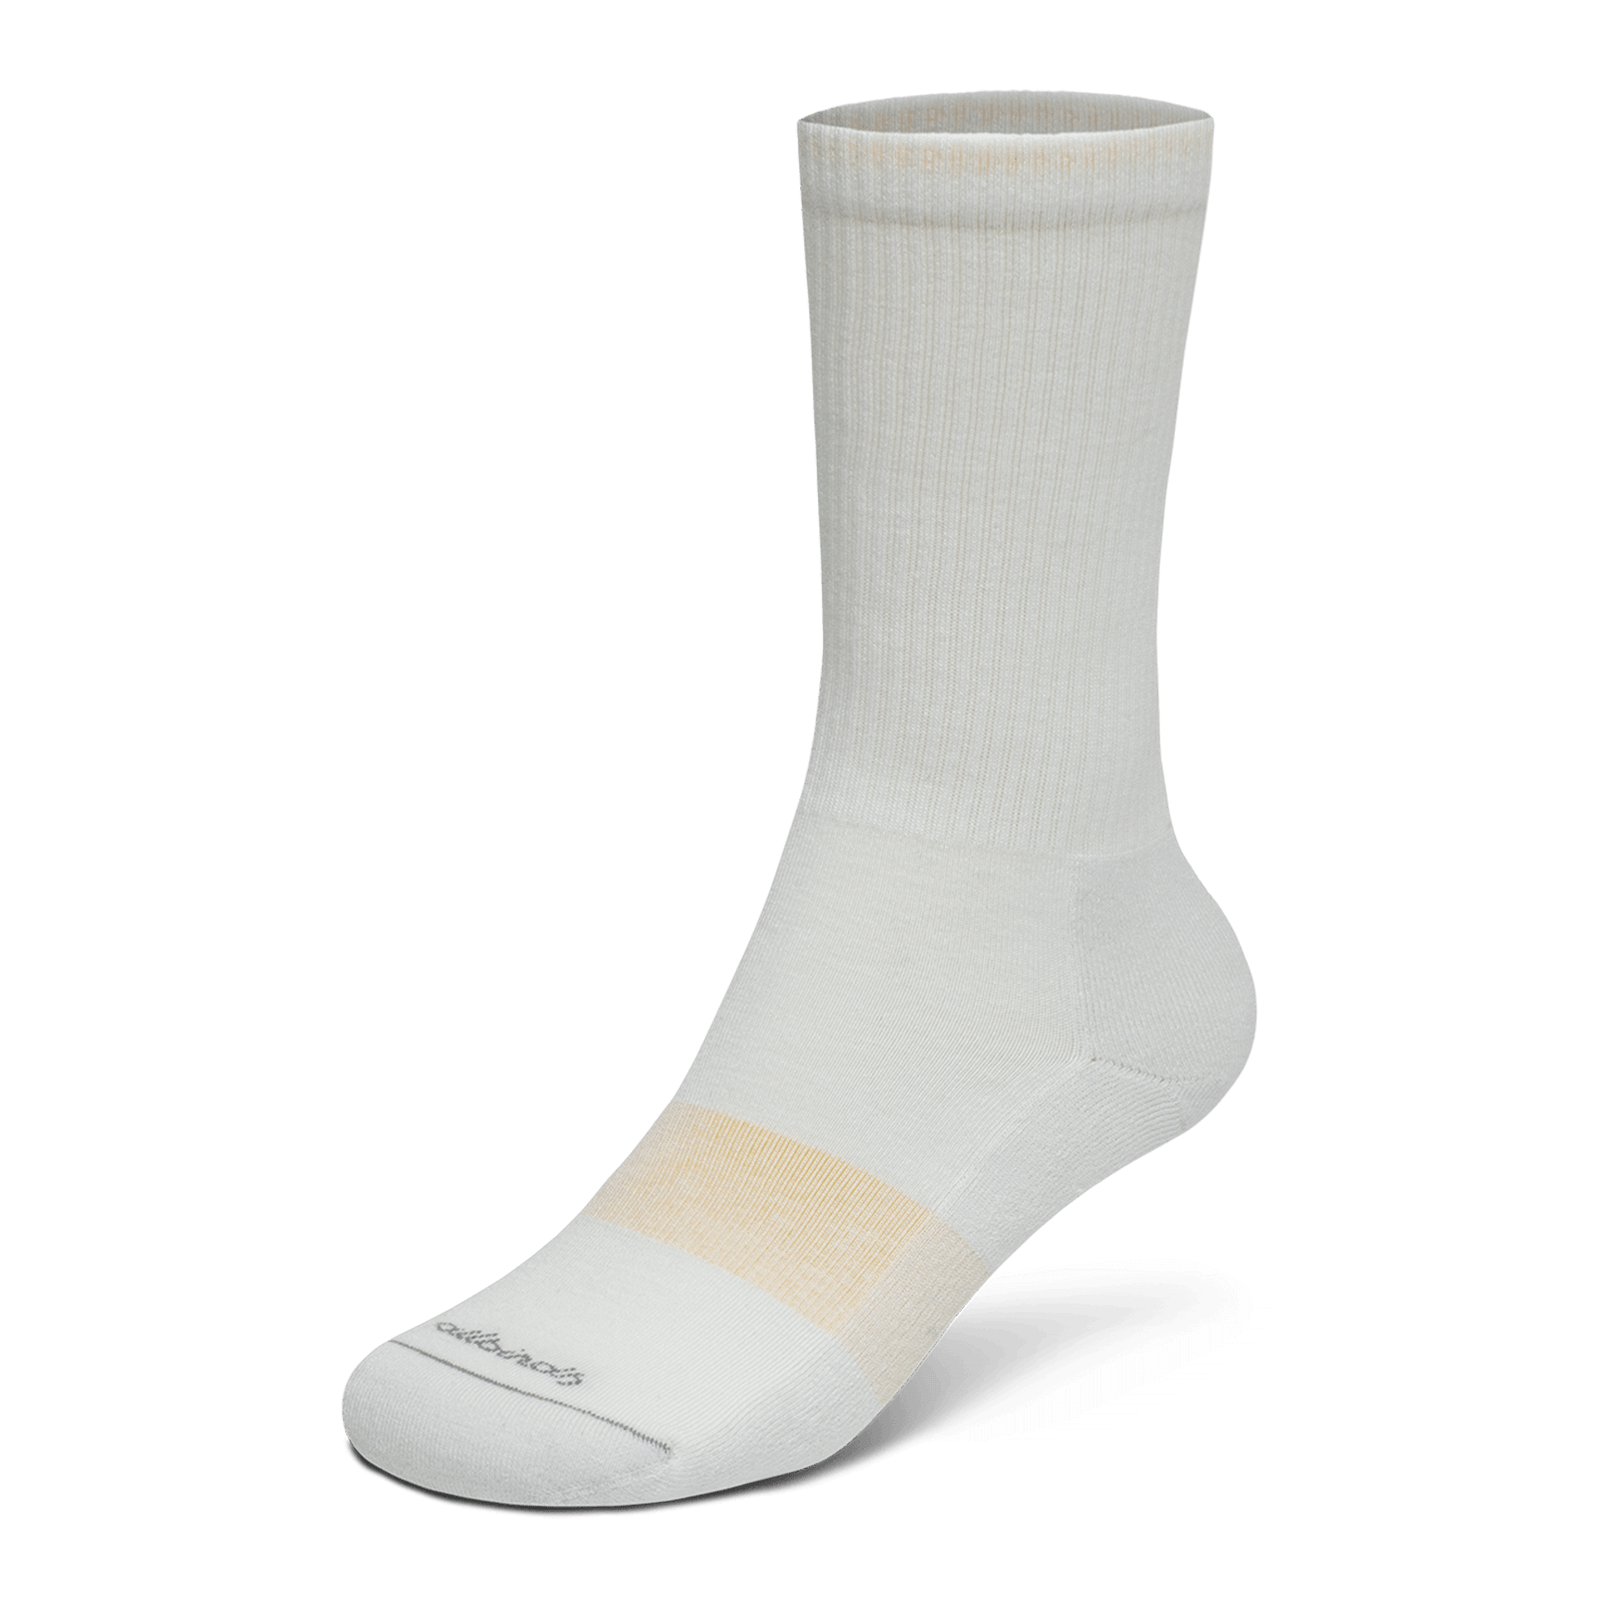 Call Me White Socks - Running white socks - Pacific and Co.